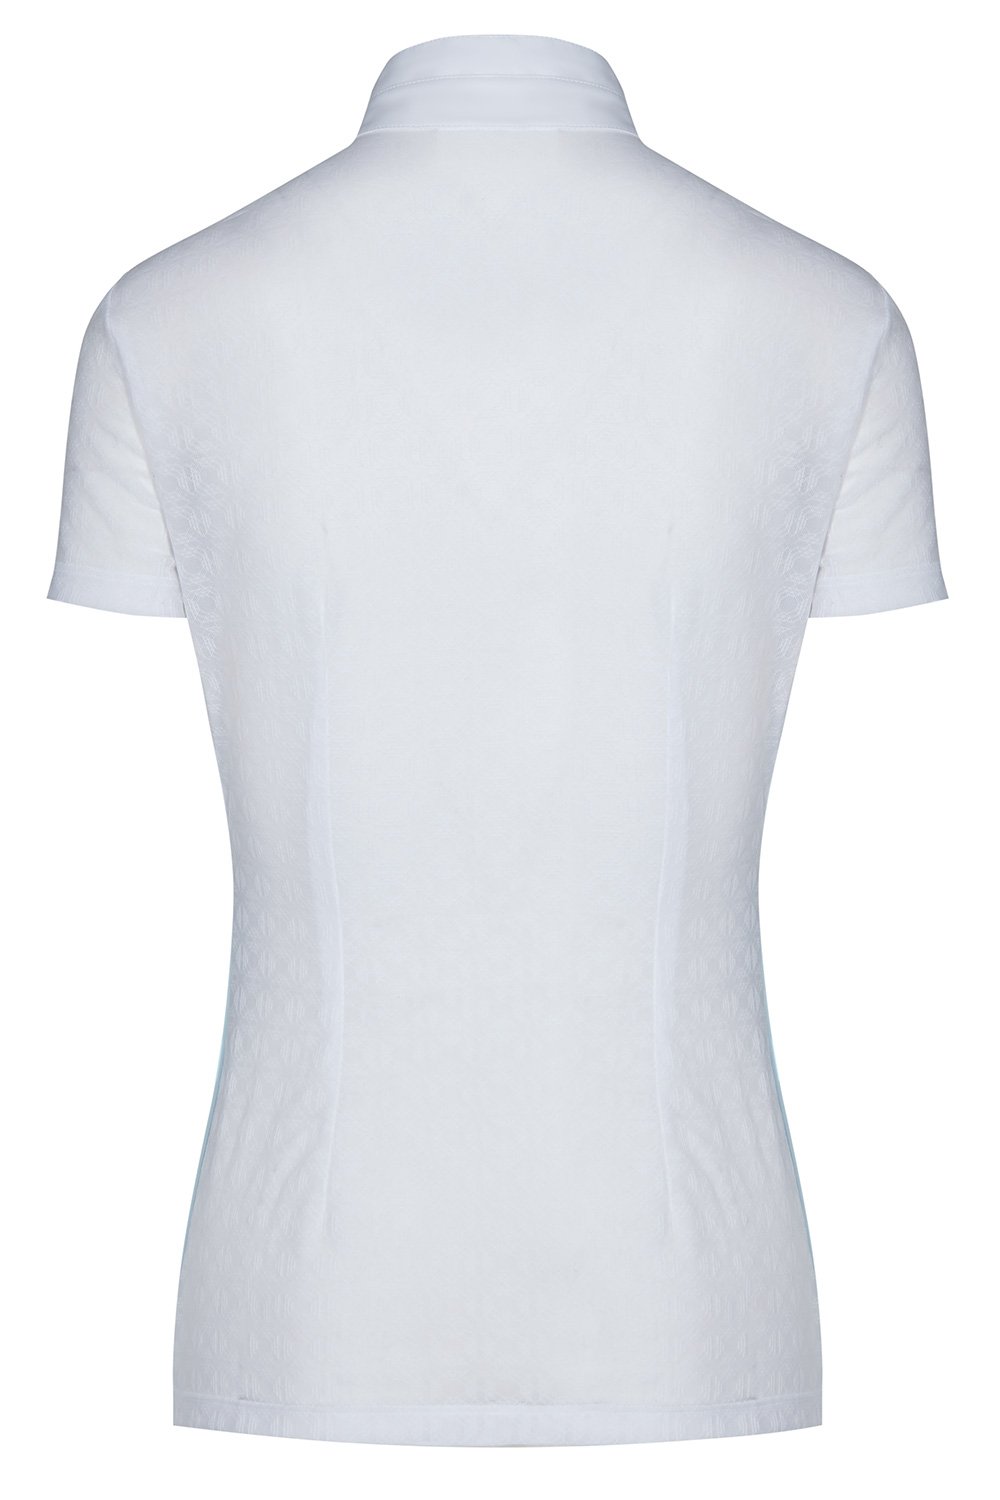 Cavalleria Toscana Transparent Jersey Elegant Competition Short Sleeve Shirt - Size L - New!